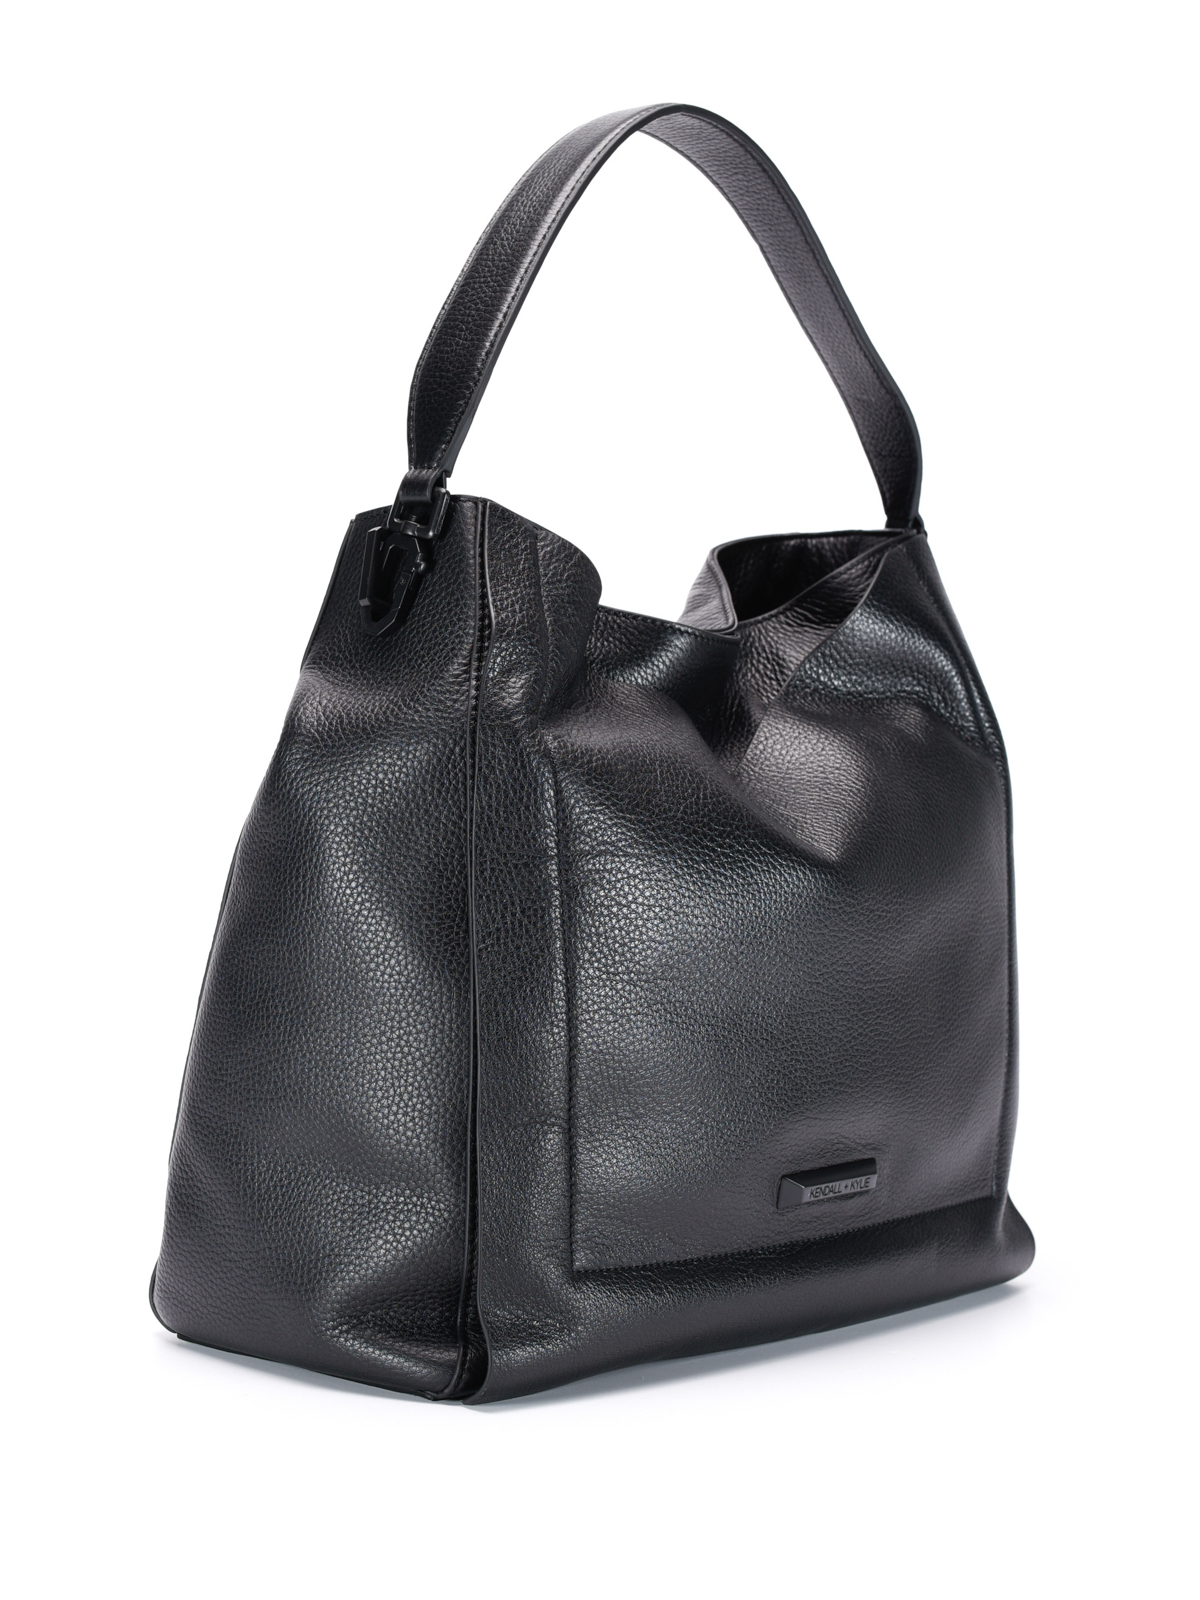 Shoulder bags Kendall + Kylie - Carina hammered leather hobo bag - CARINA